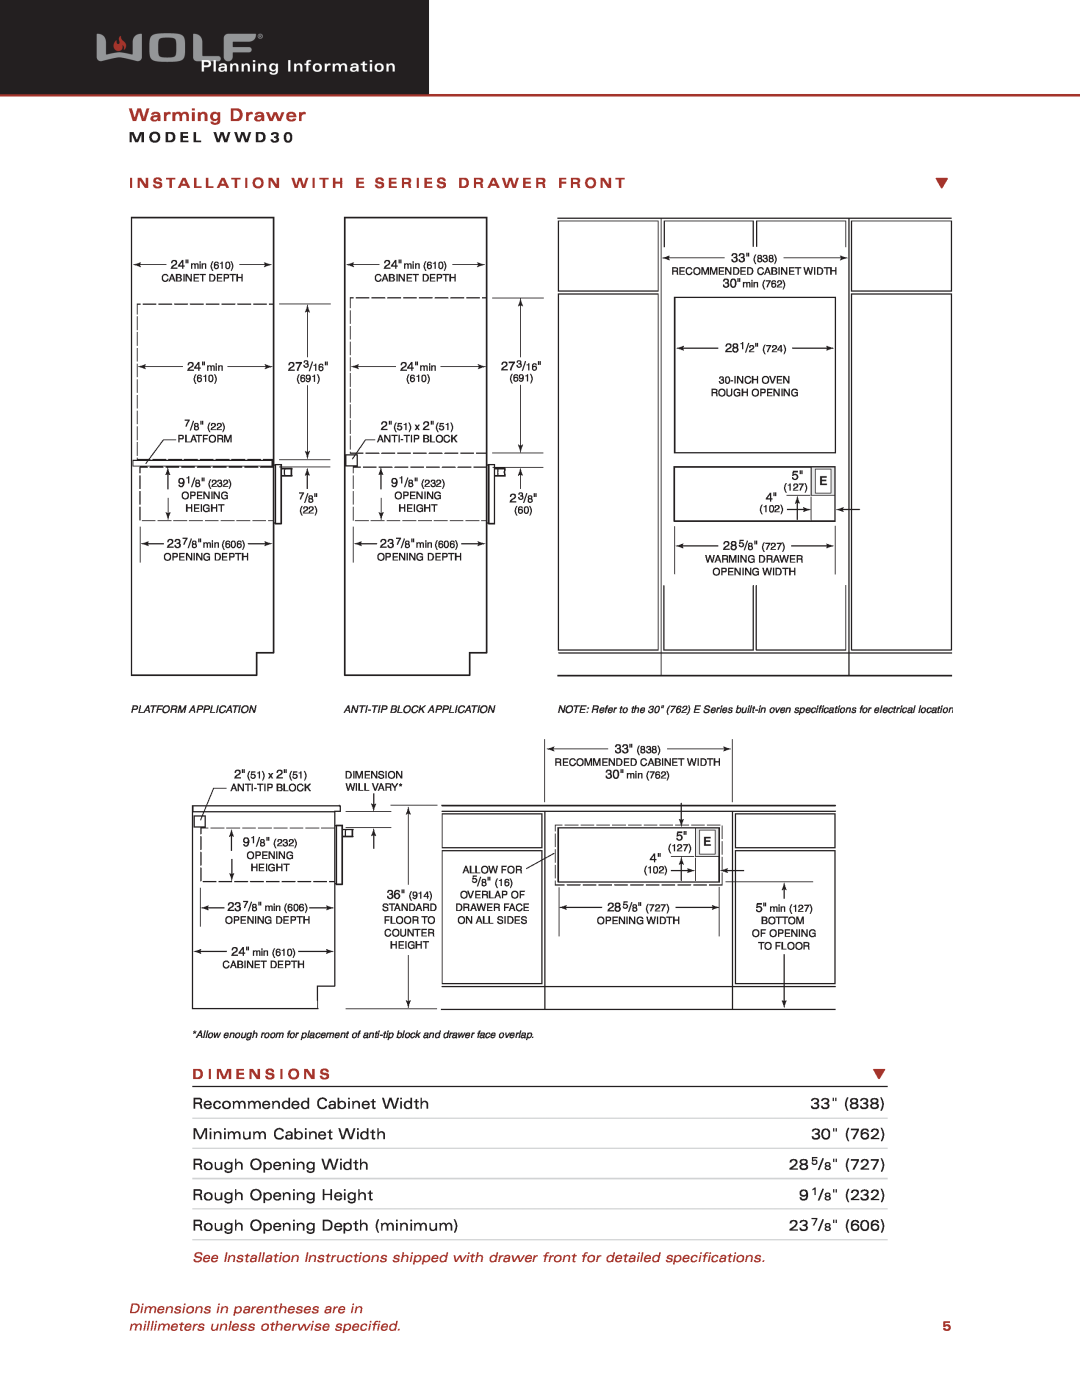 Wolf Appliance Company WWD30 dimensions Warming Drawer, Planning Information, M O D E L W W D 3, D I M E N S I O N S 